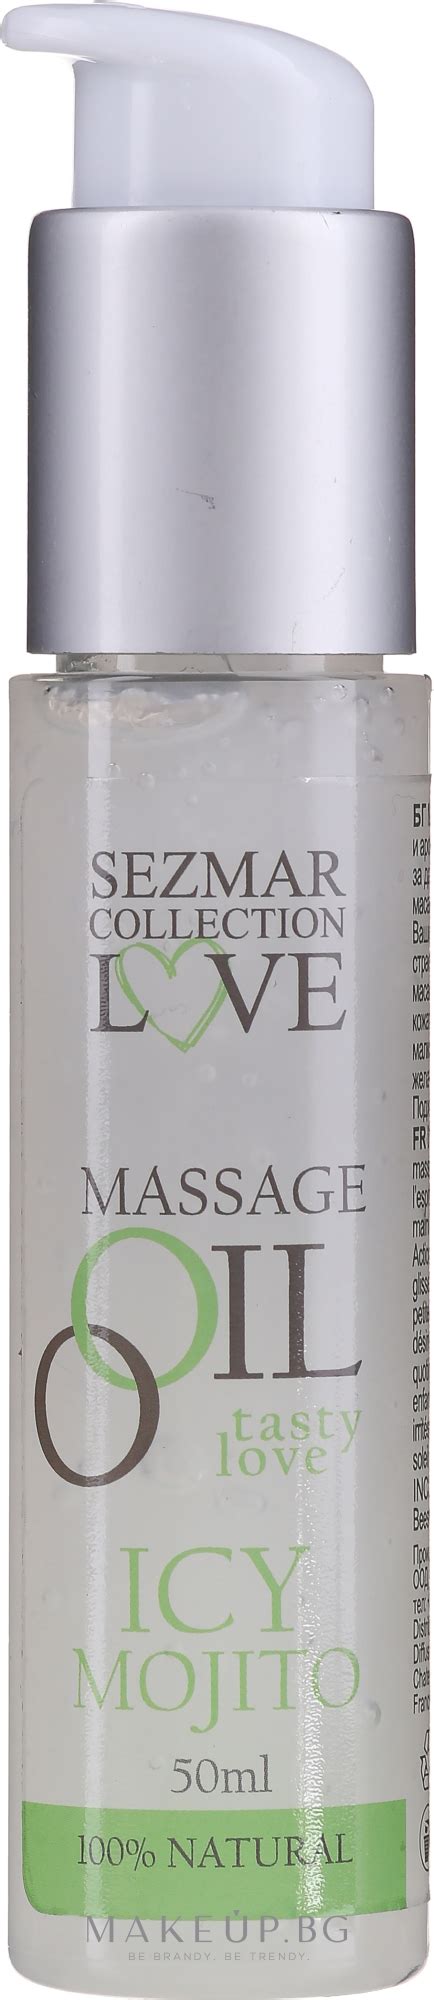 sezmar collection love massage oil iced mojito Масажно масло Ледено мохито makeup bg